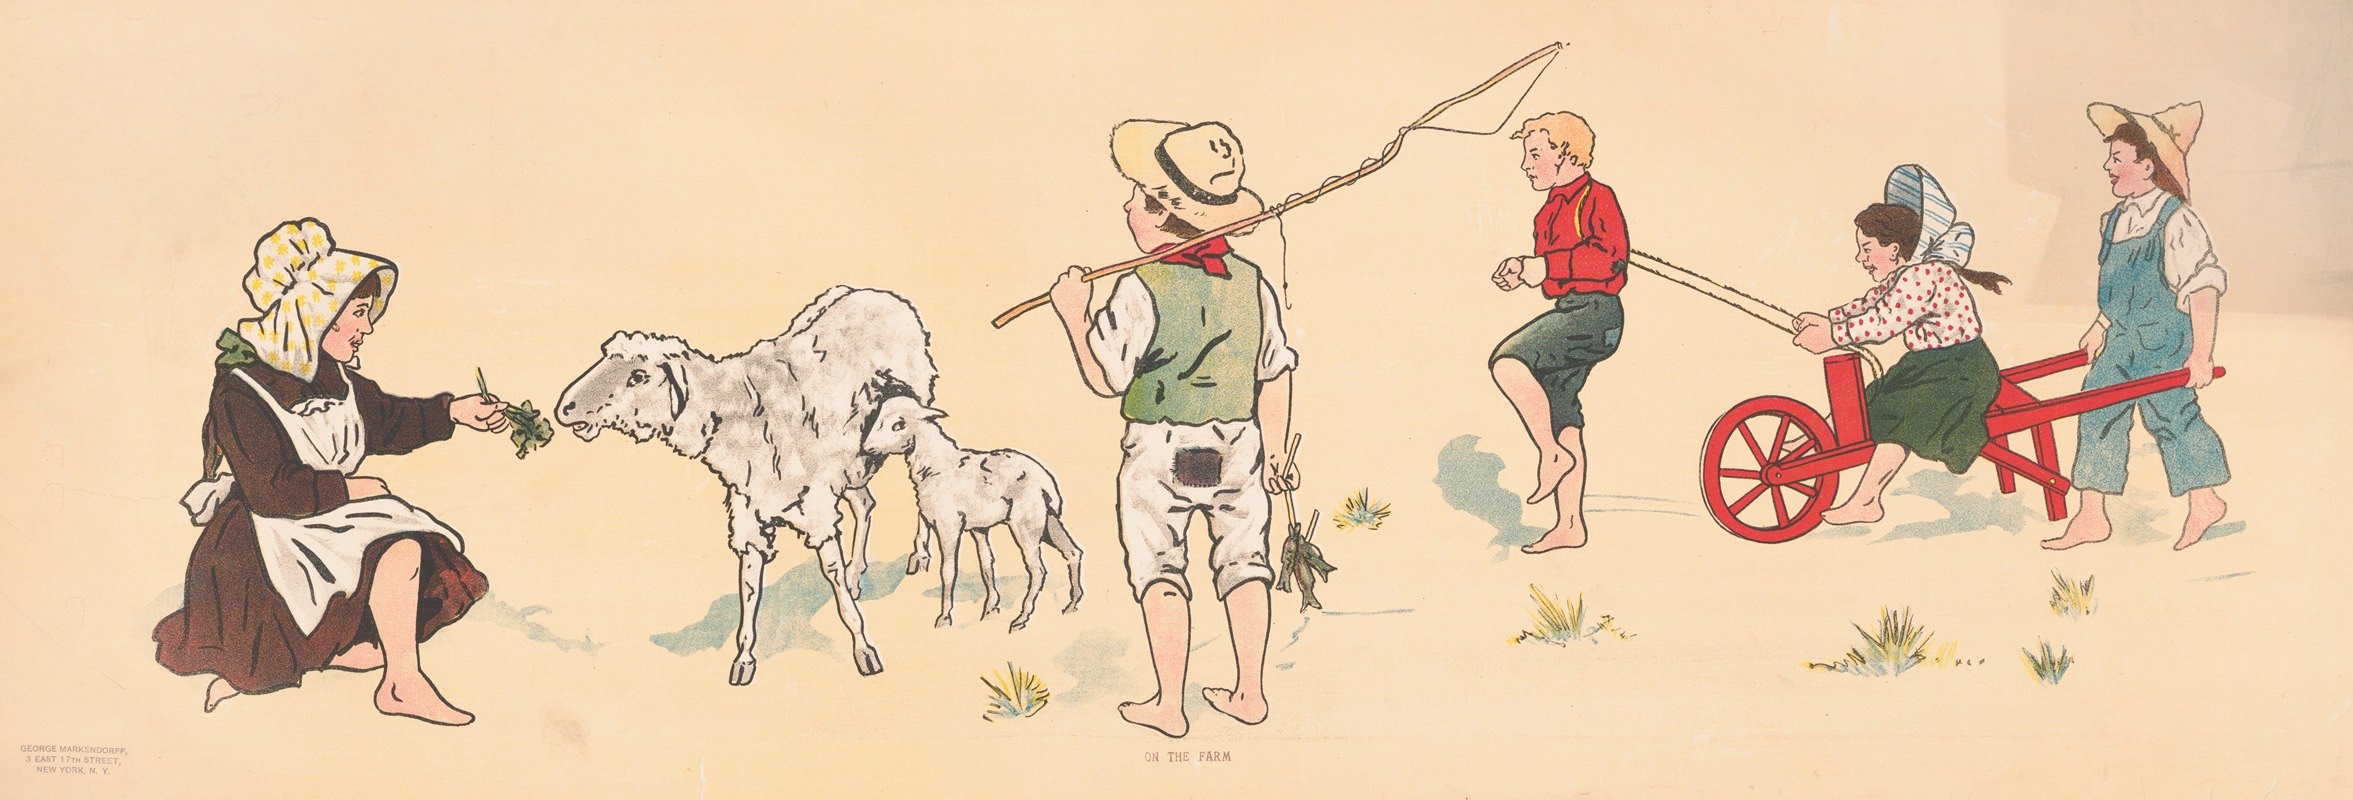 在农场`On the farm (1908) by George Markendorff